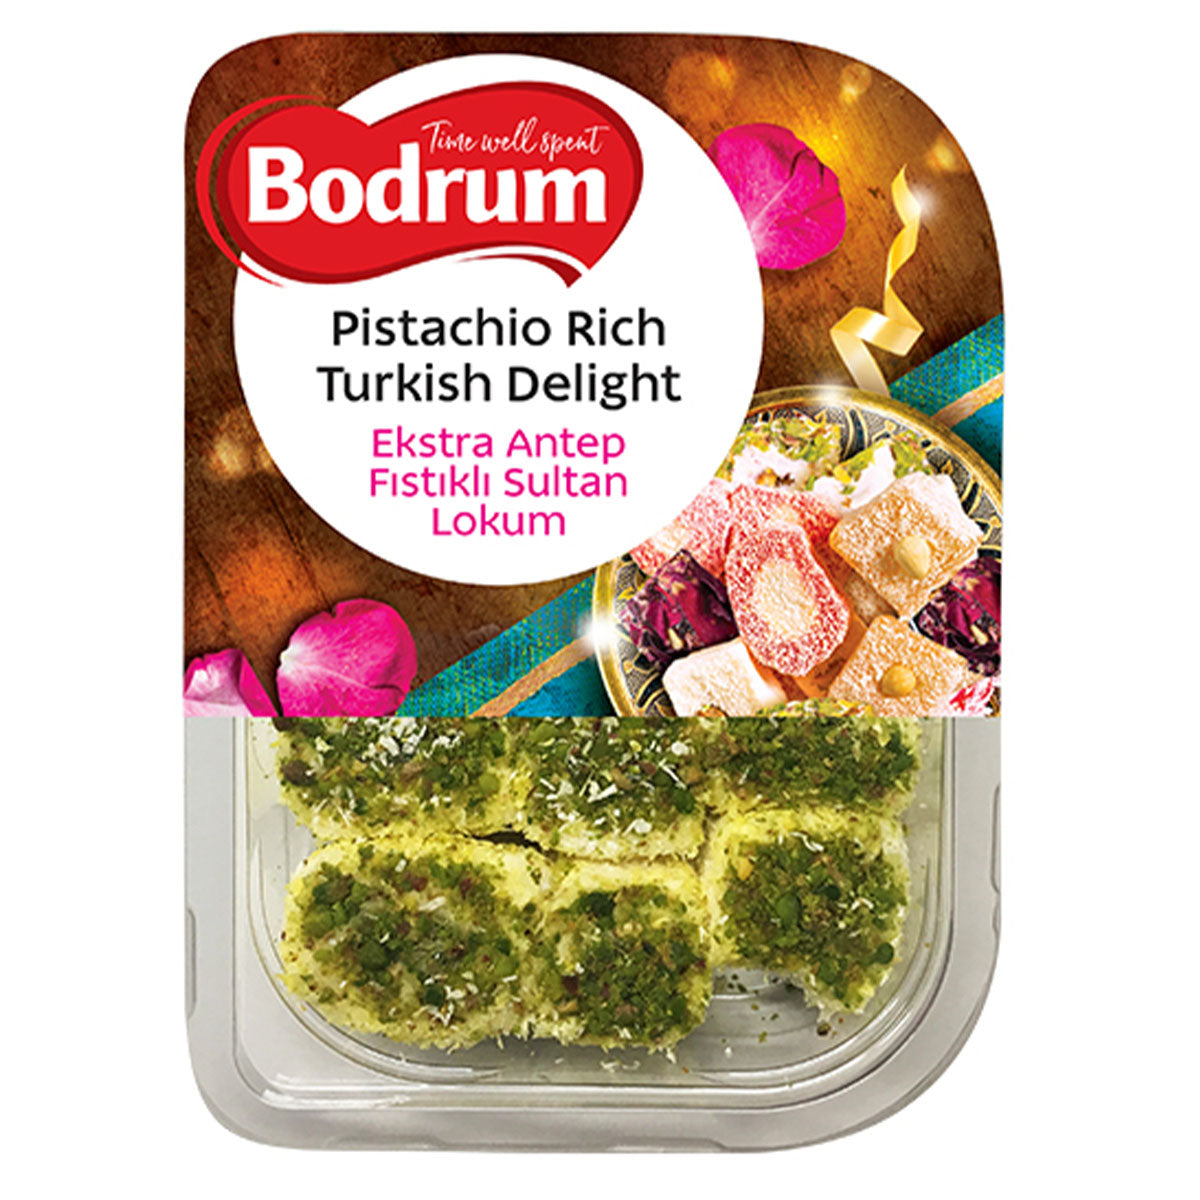 Bodrum - Pistachio Rich Sultan Delight - 200g - Continental Food Store